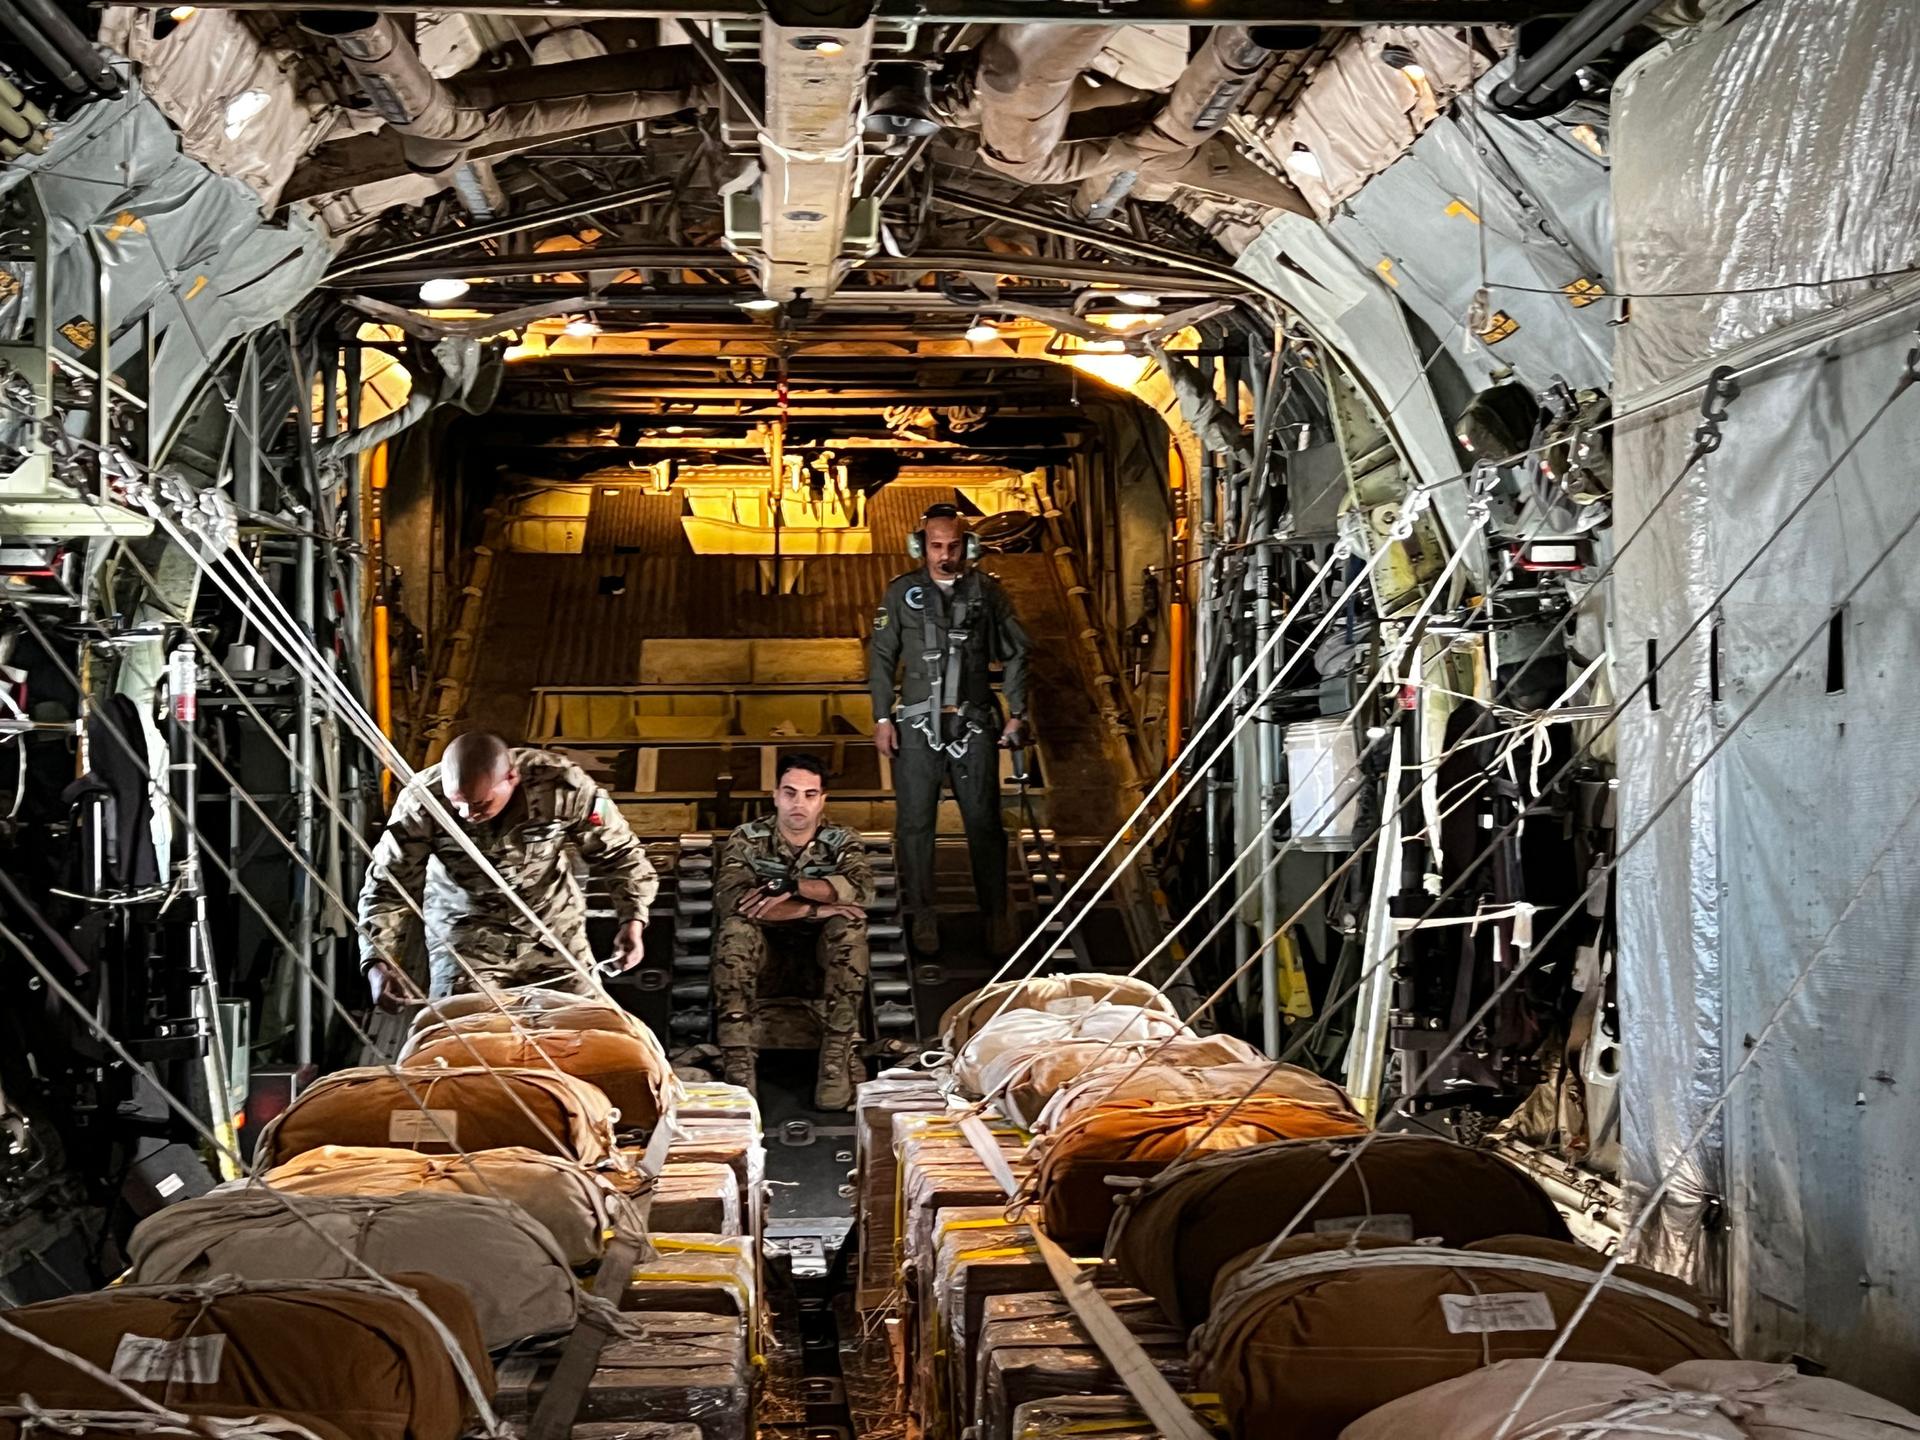 Members of the Royal Jordanian Air Force prepare for aid drop over Gaza.